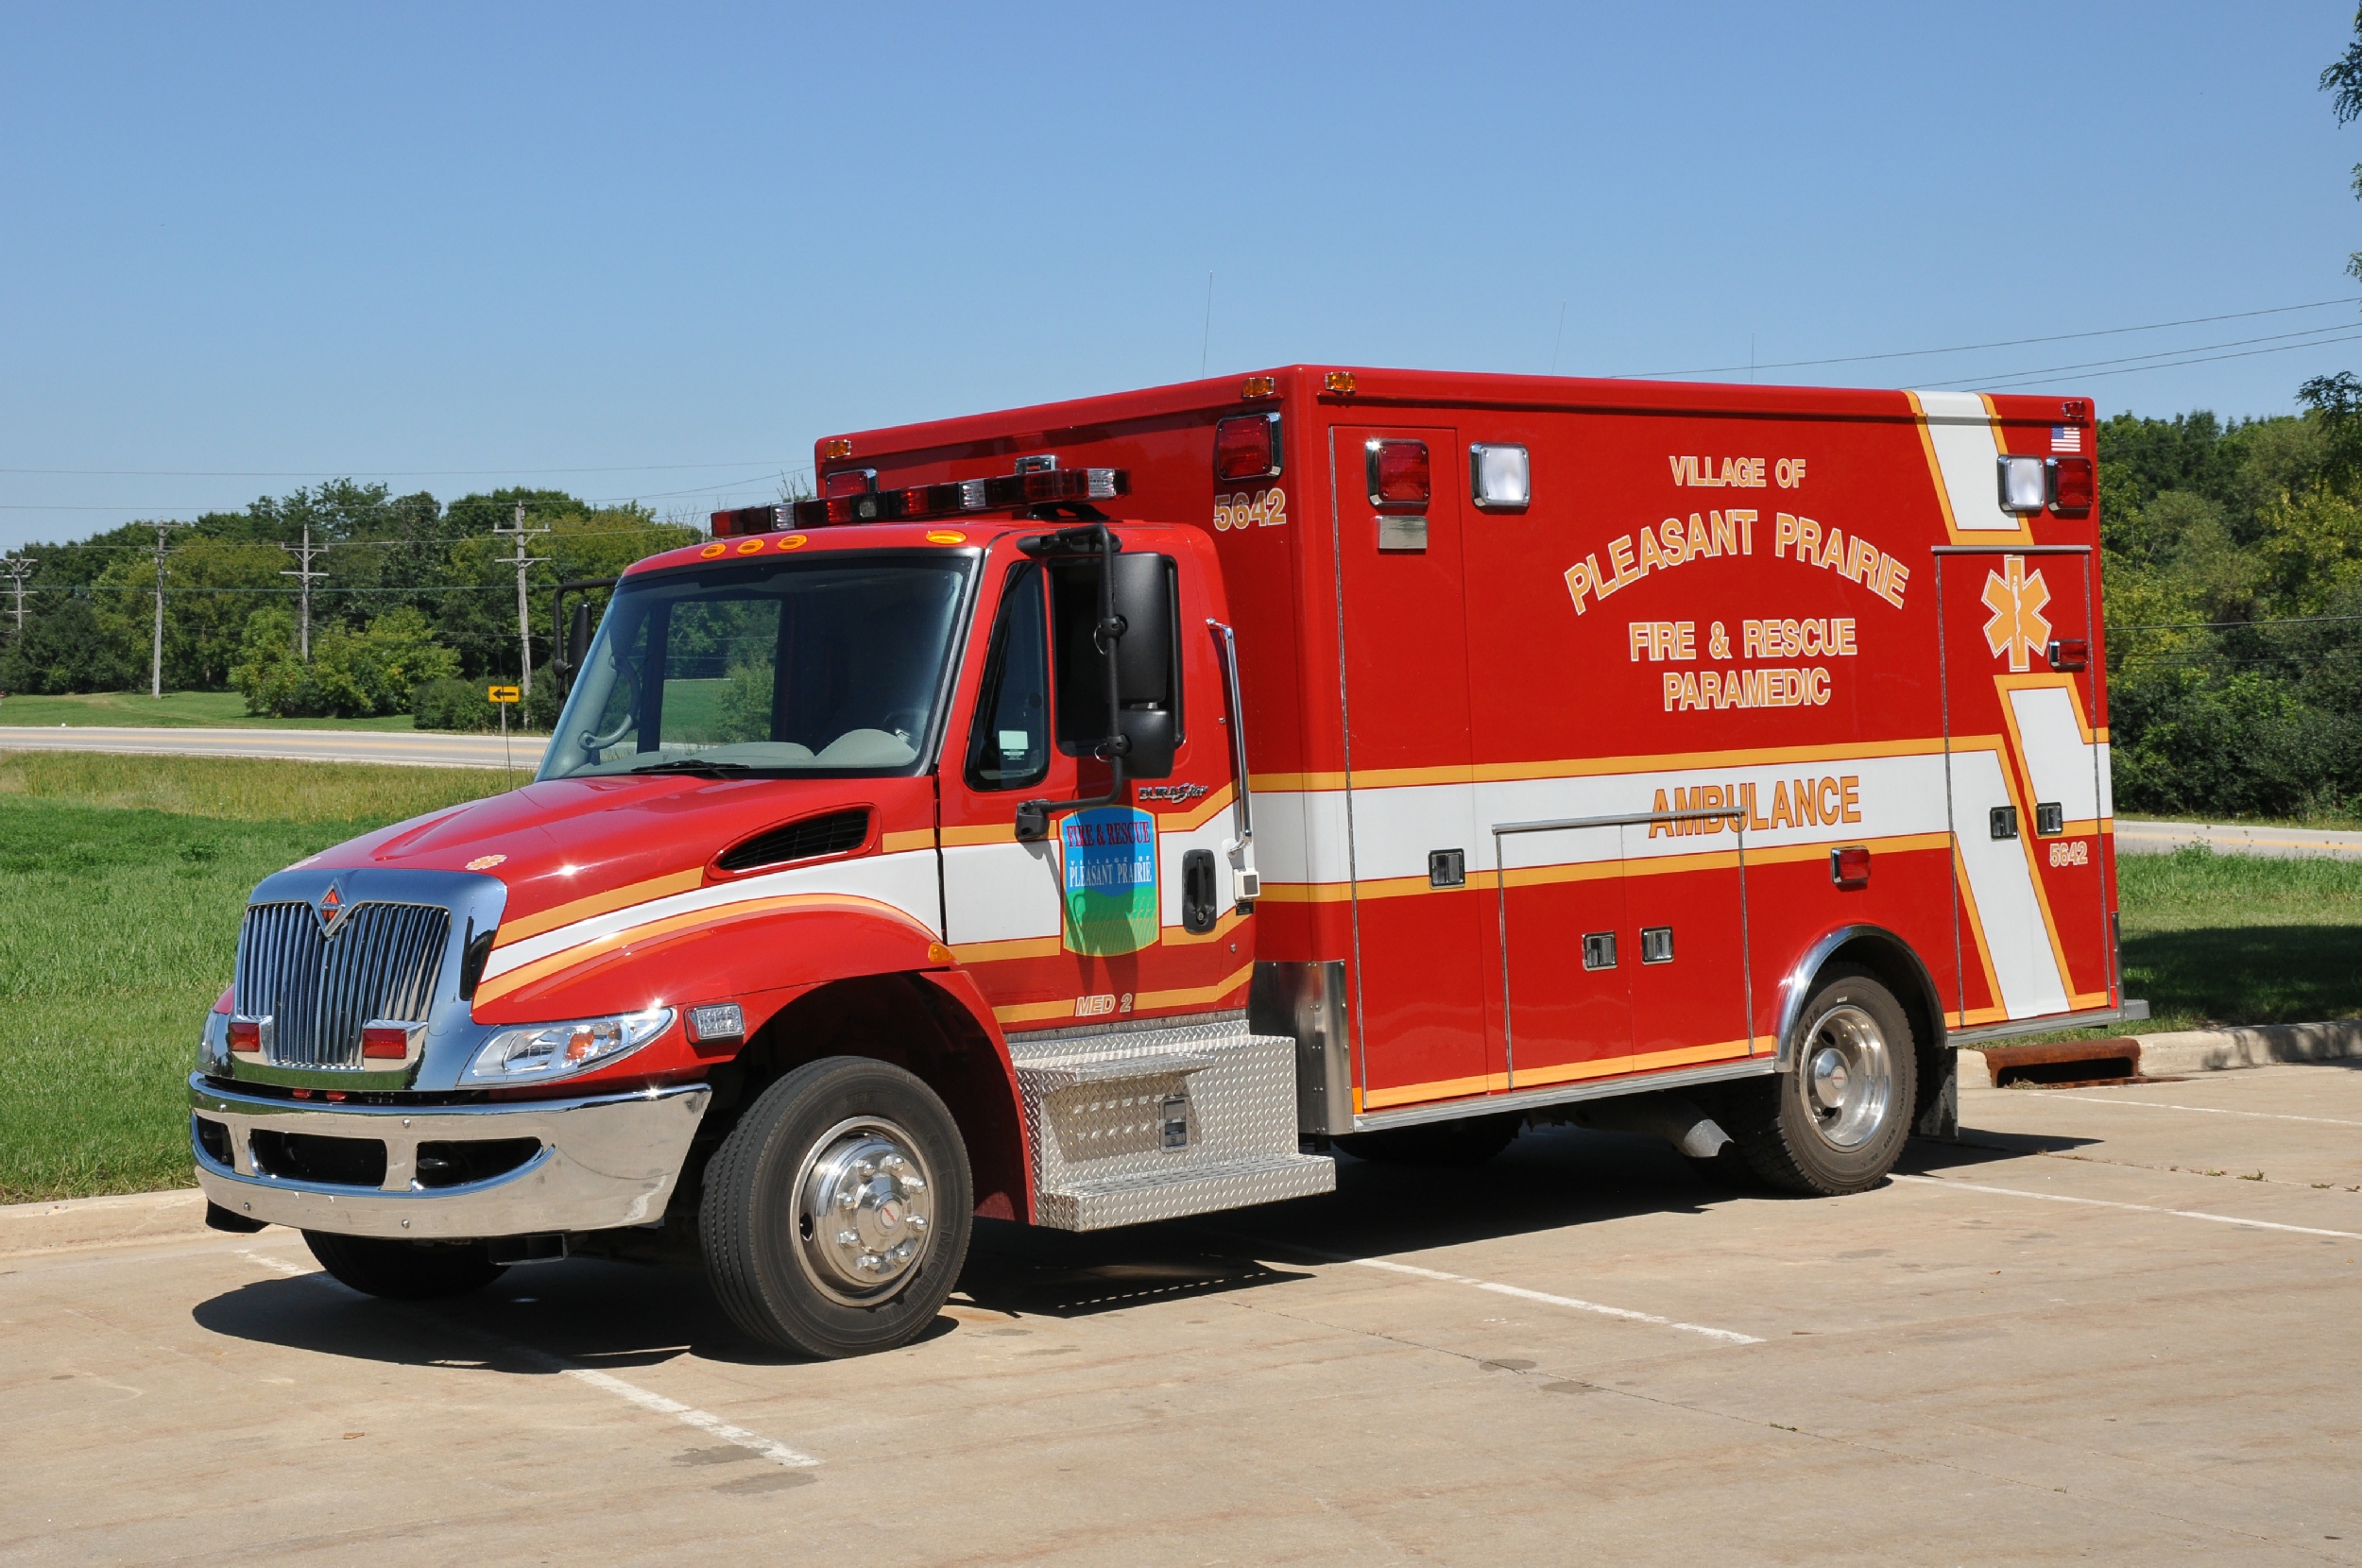 Pleasant Prairie Fire & Rescue Department